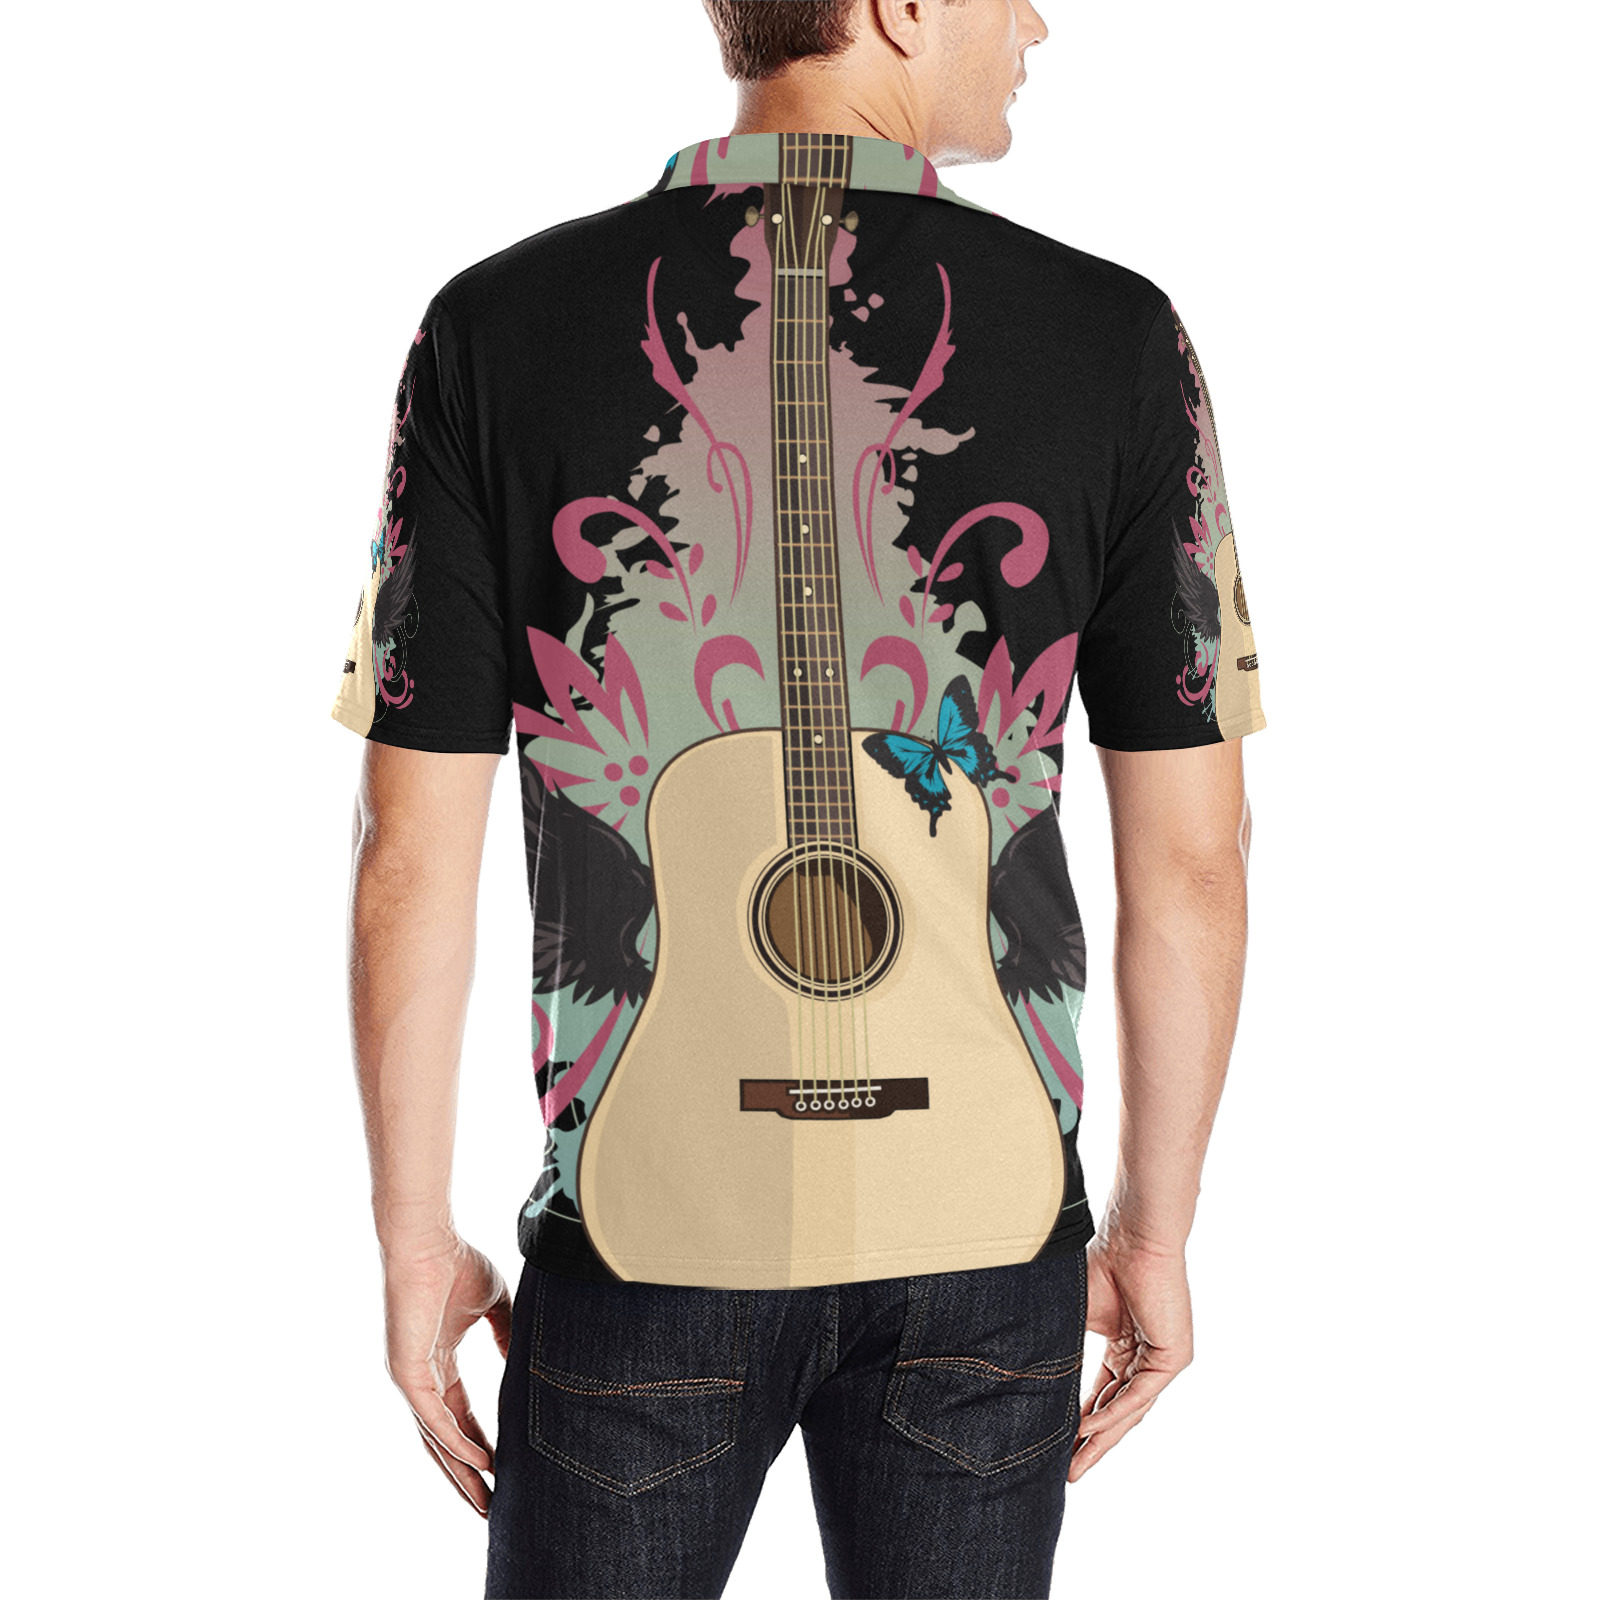 Guitar Vibes Men's All Over Print Polo Shirt (Model T55)